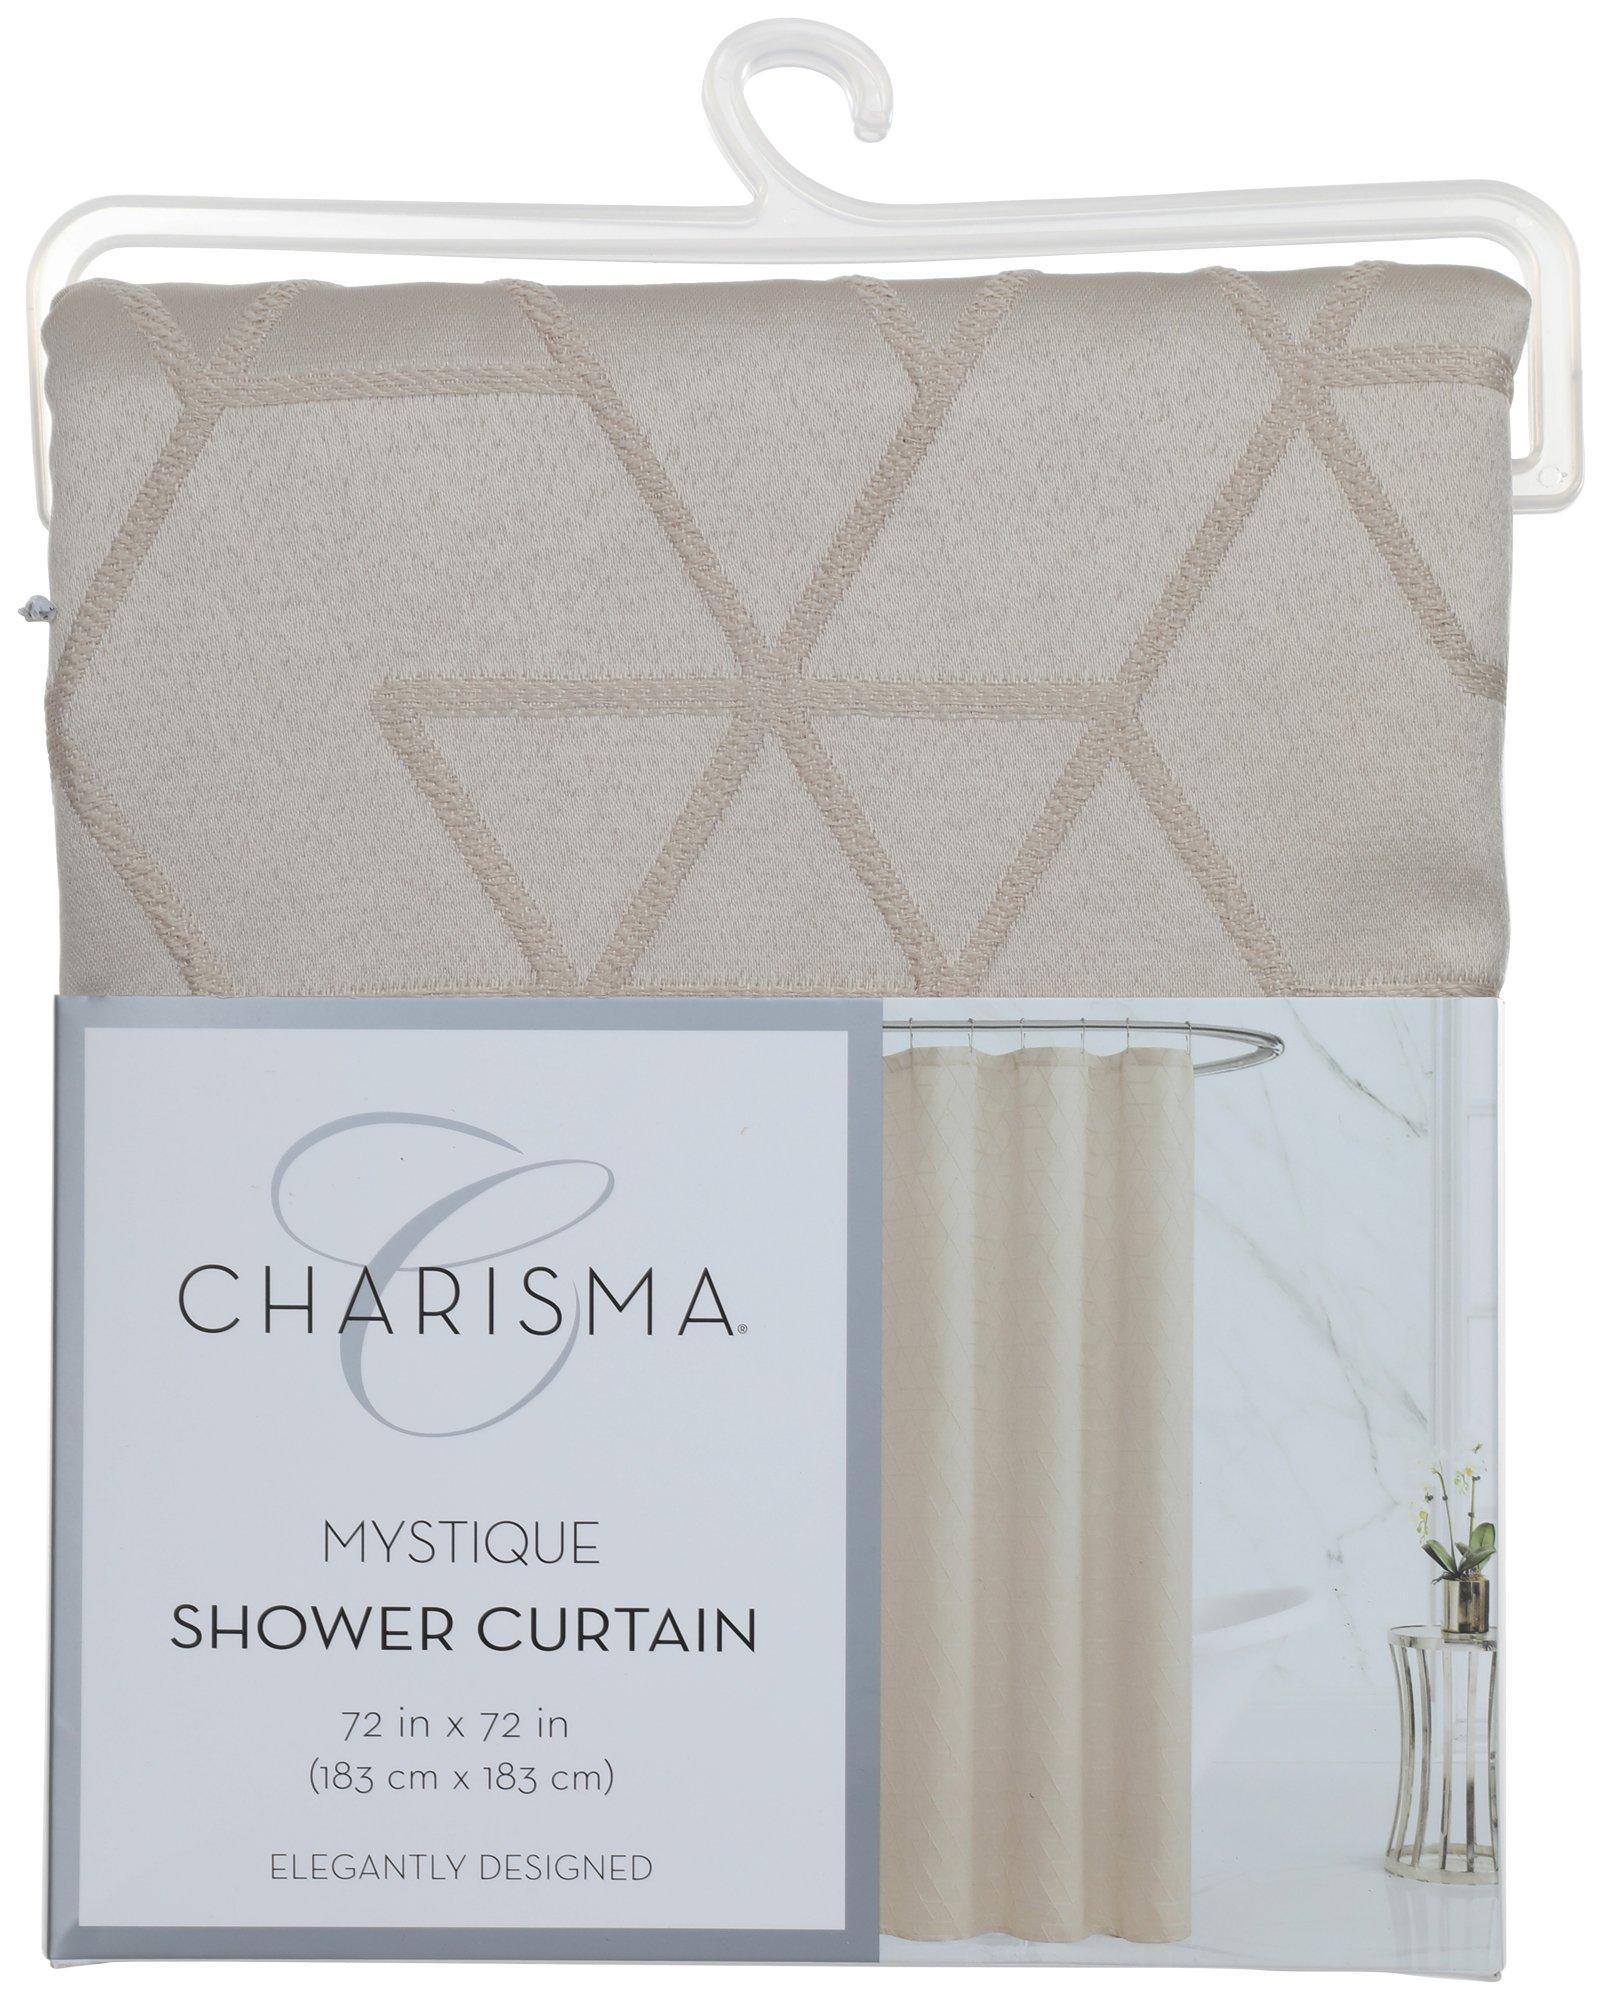 Mystique Shower Curtain